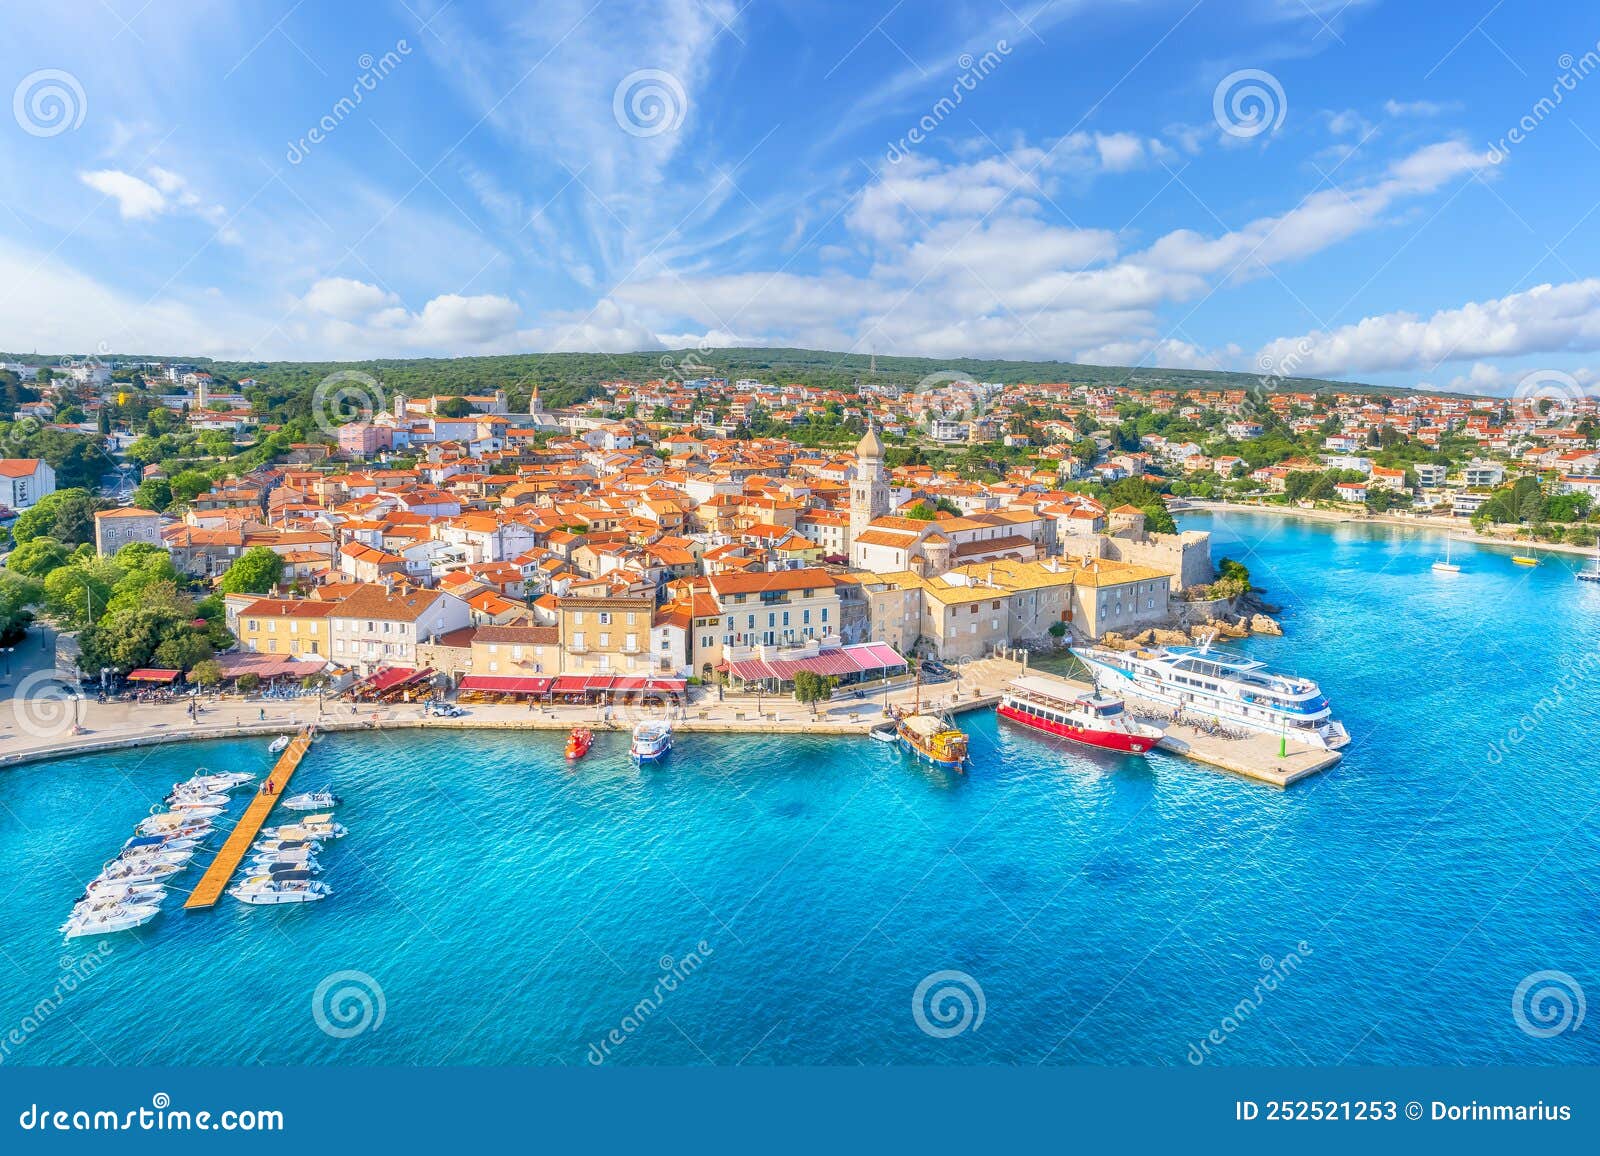 landscape  with krk town in krk island, croatia